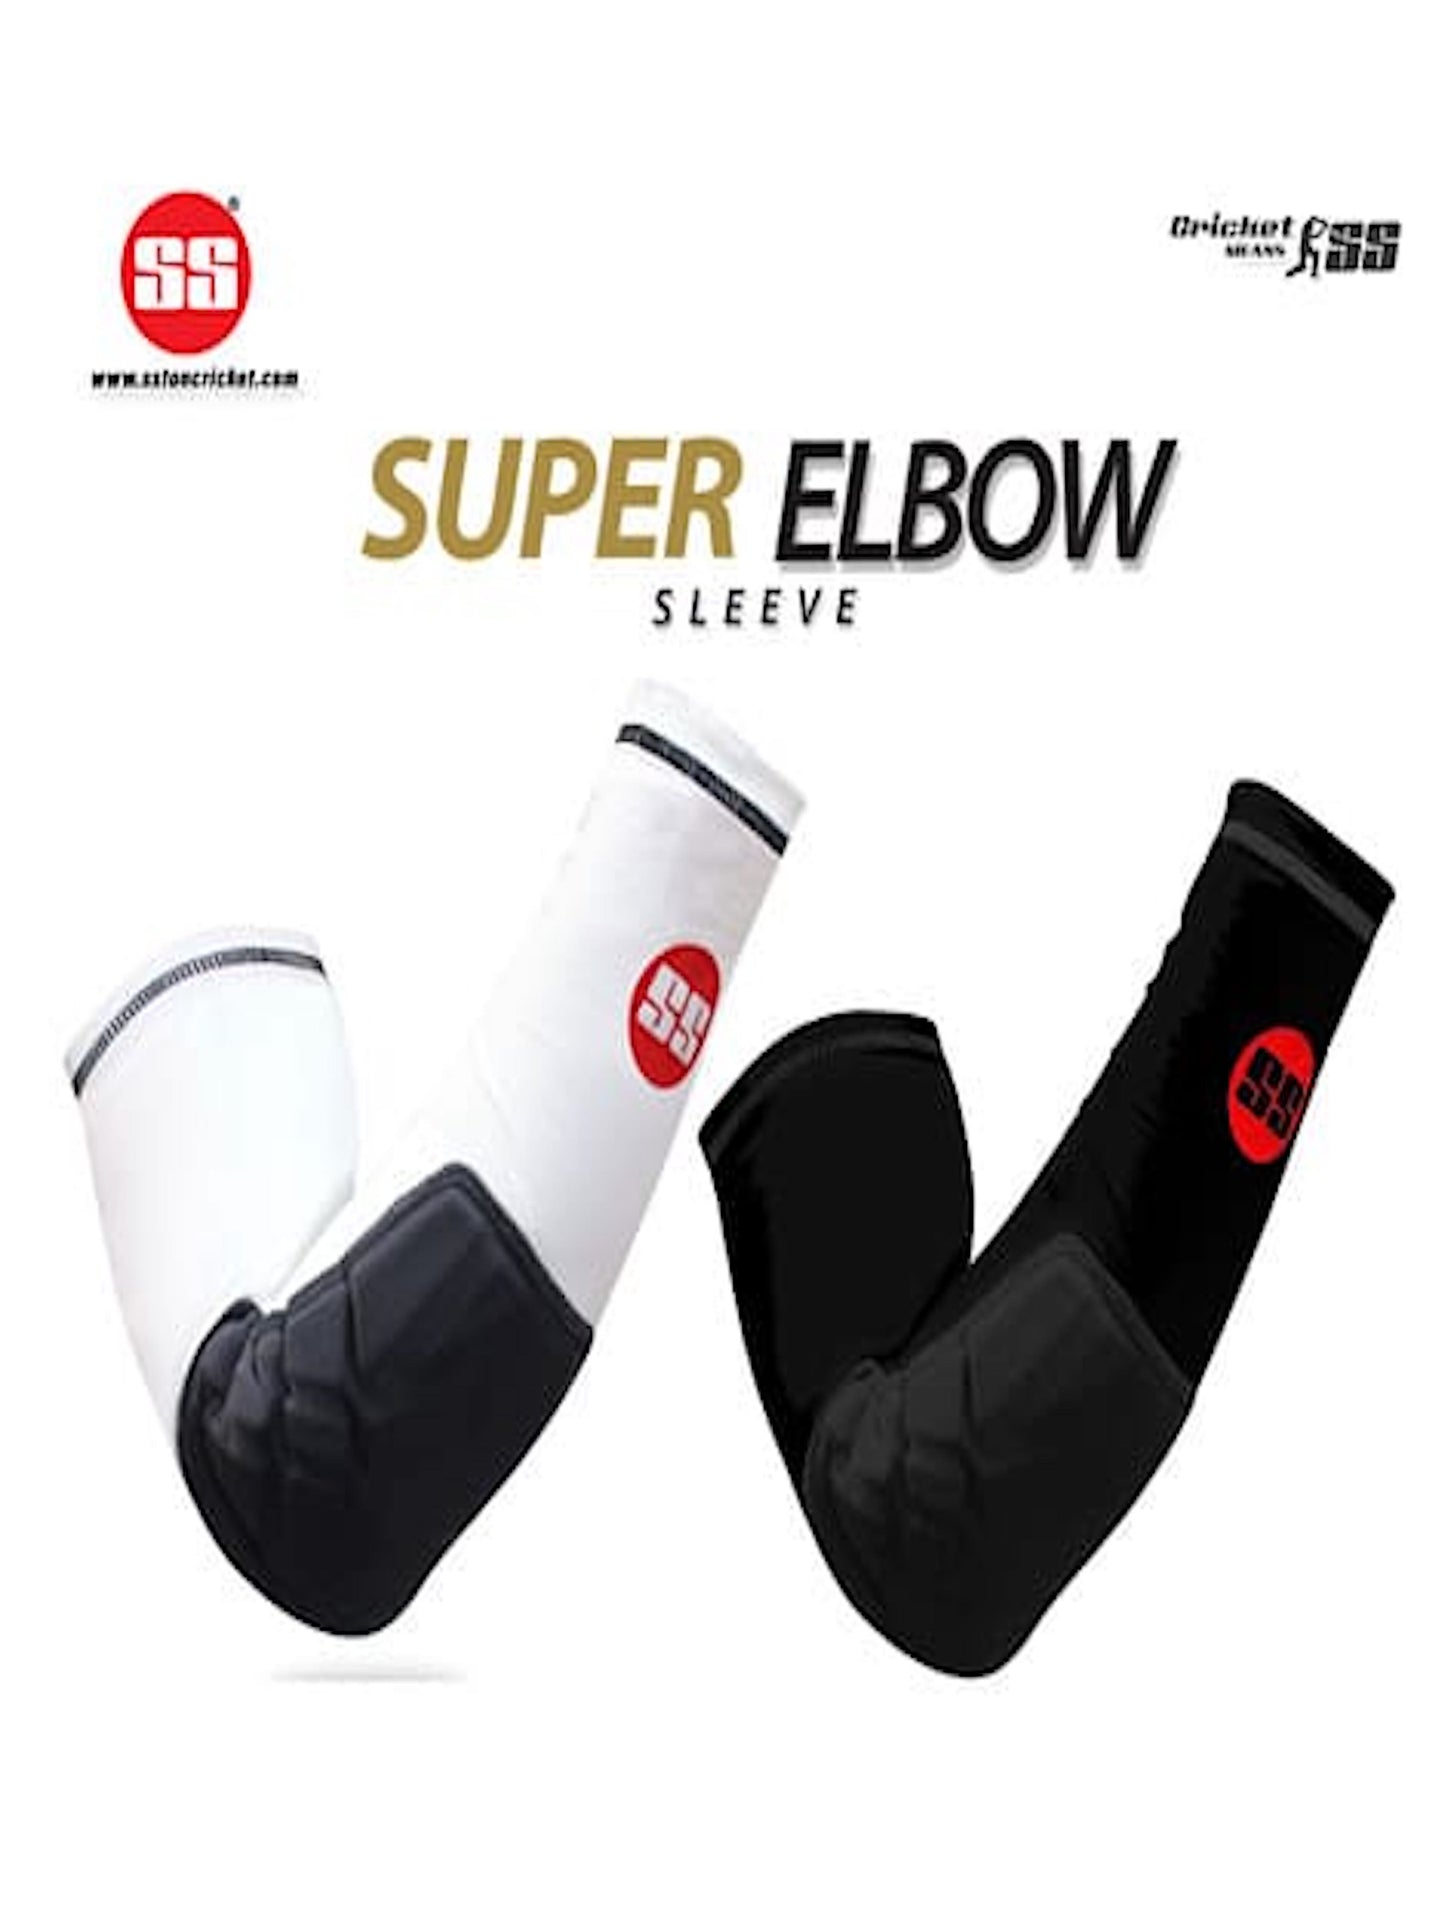 SS Super Elbow Sleeve